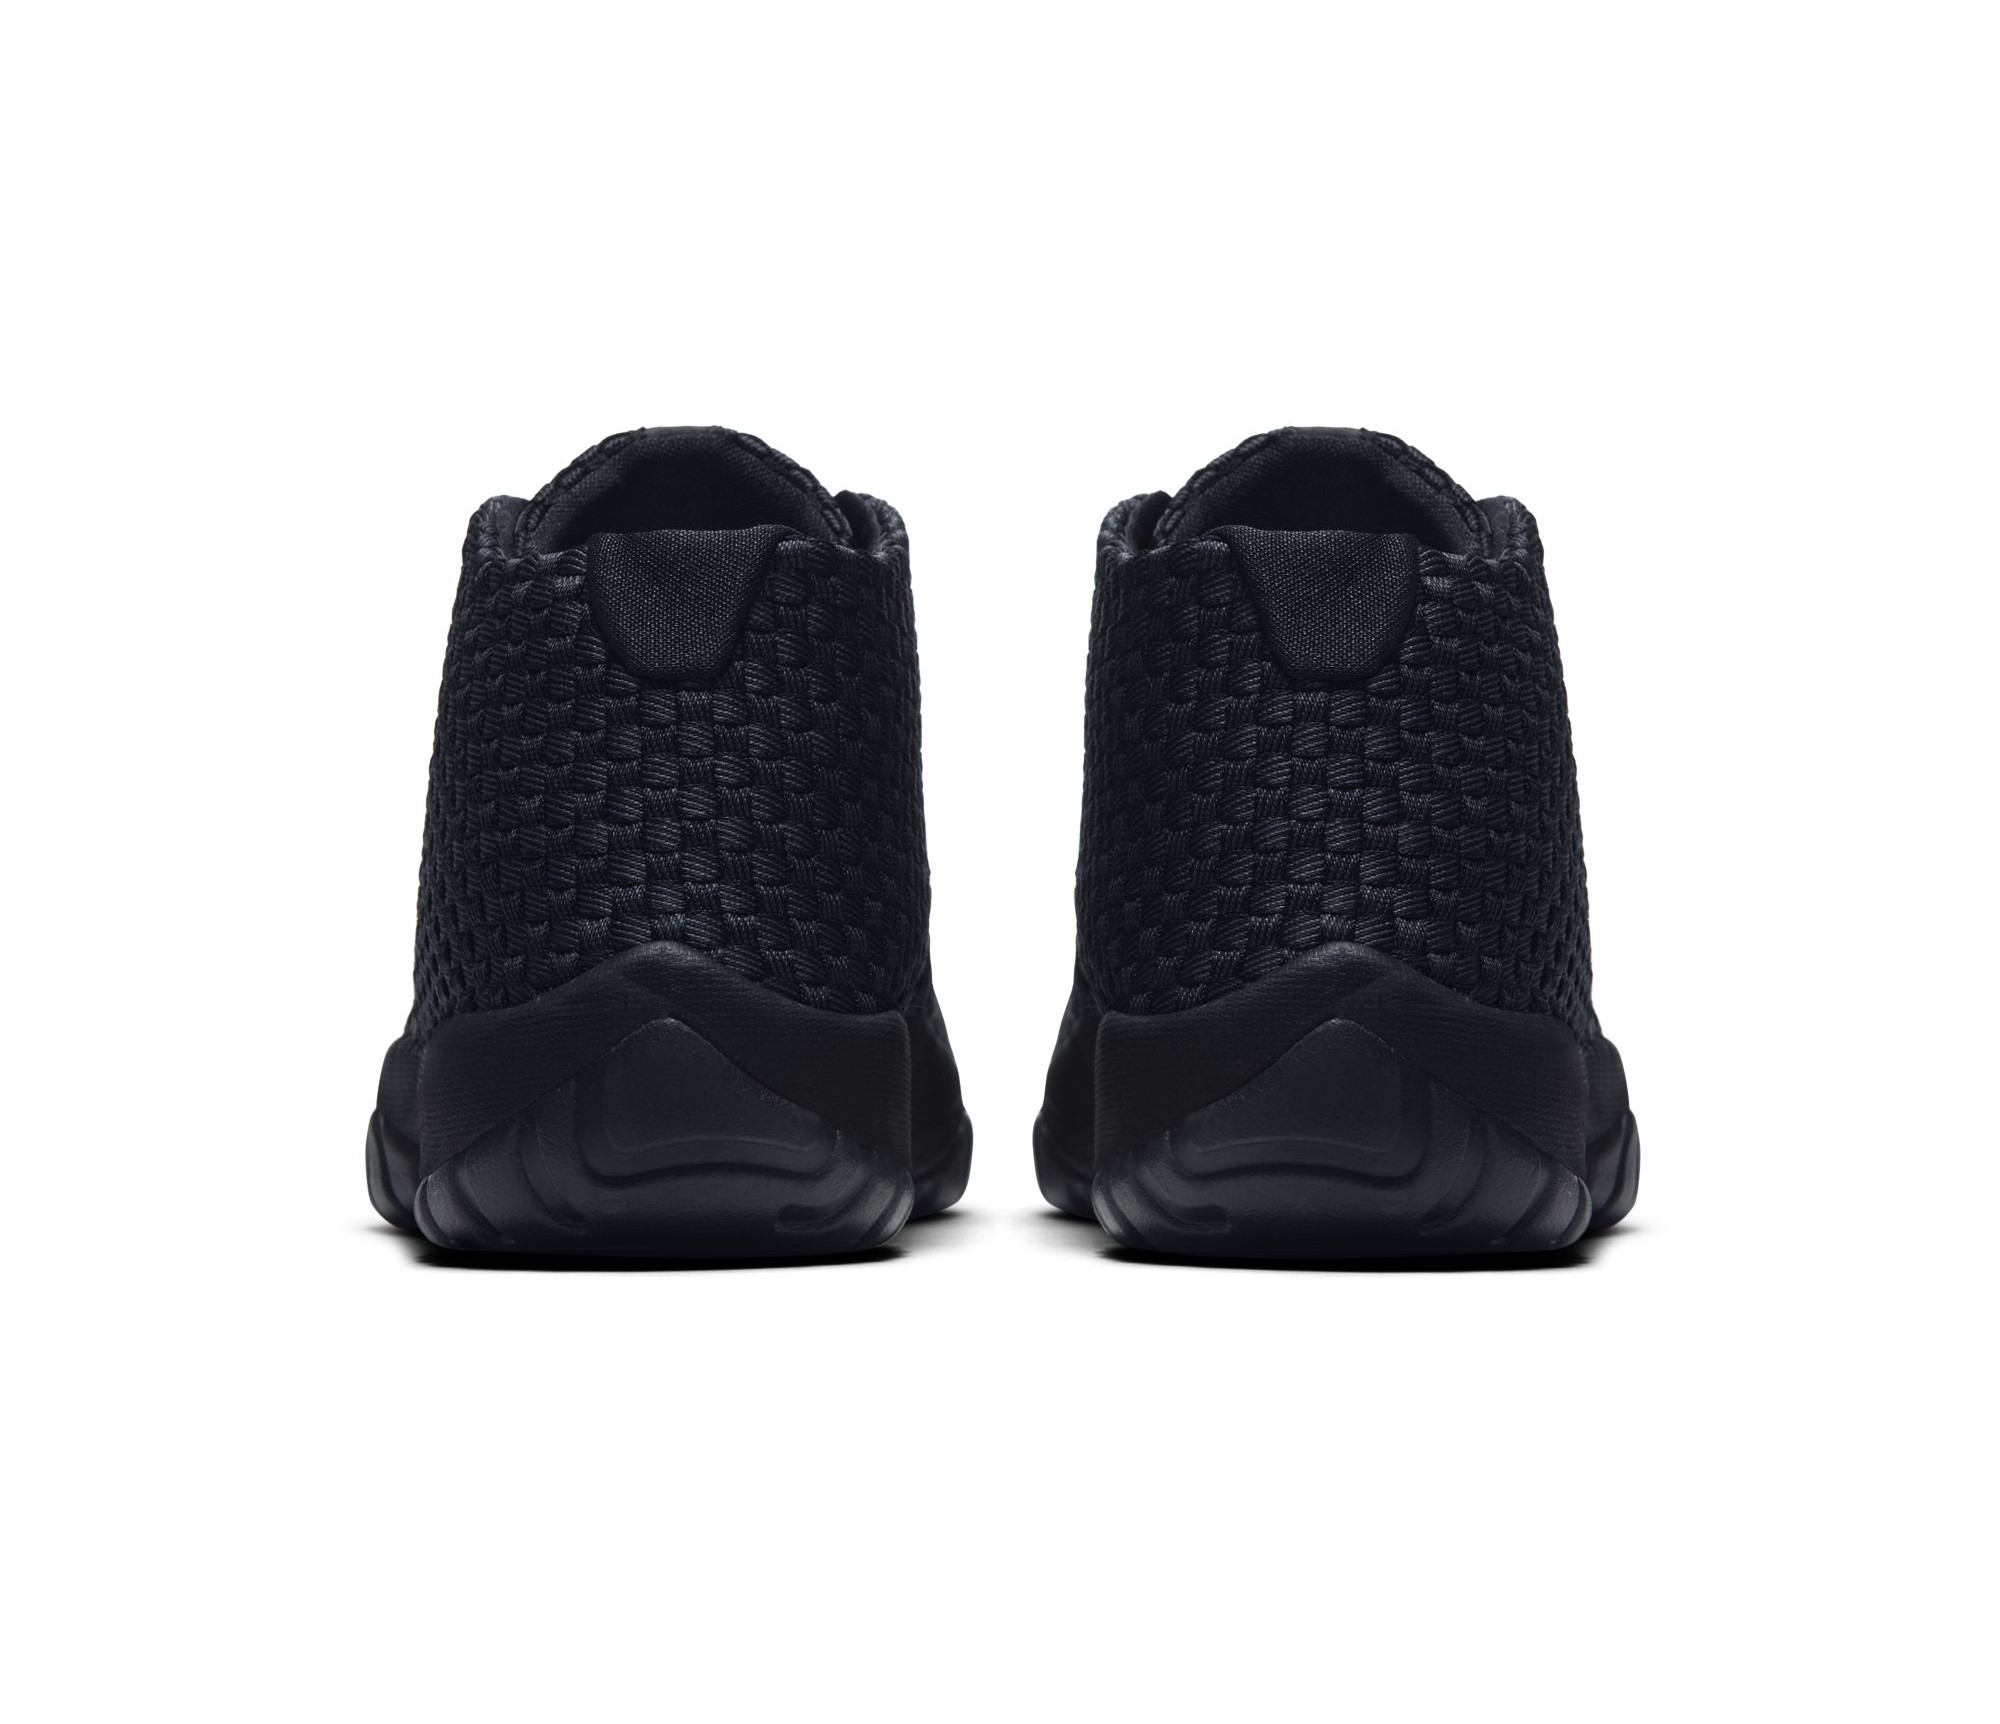 The 2018 Air Jordan Future 'Triple Black' Surfaces Online - WearTesters